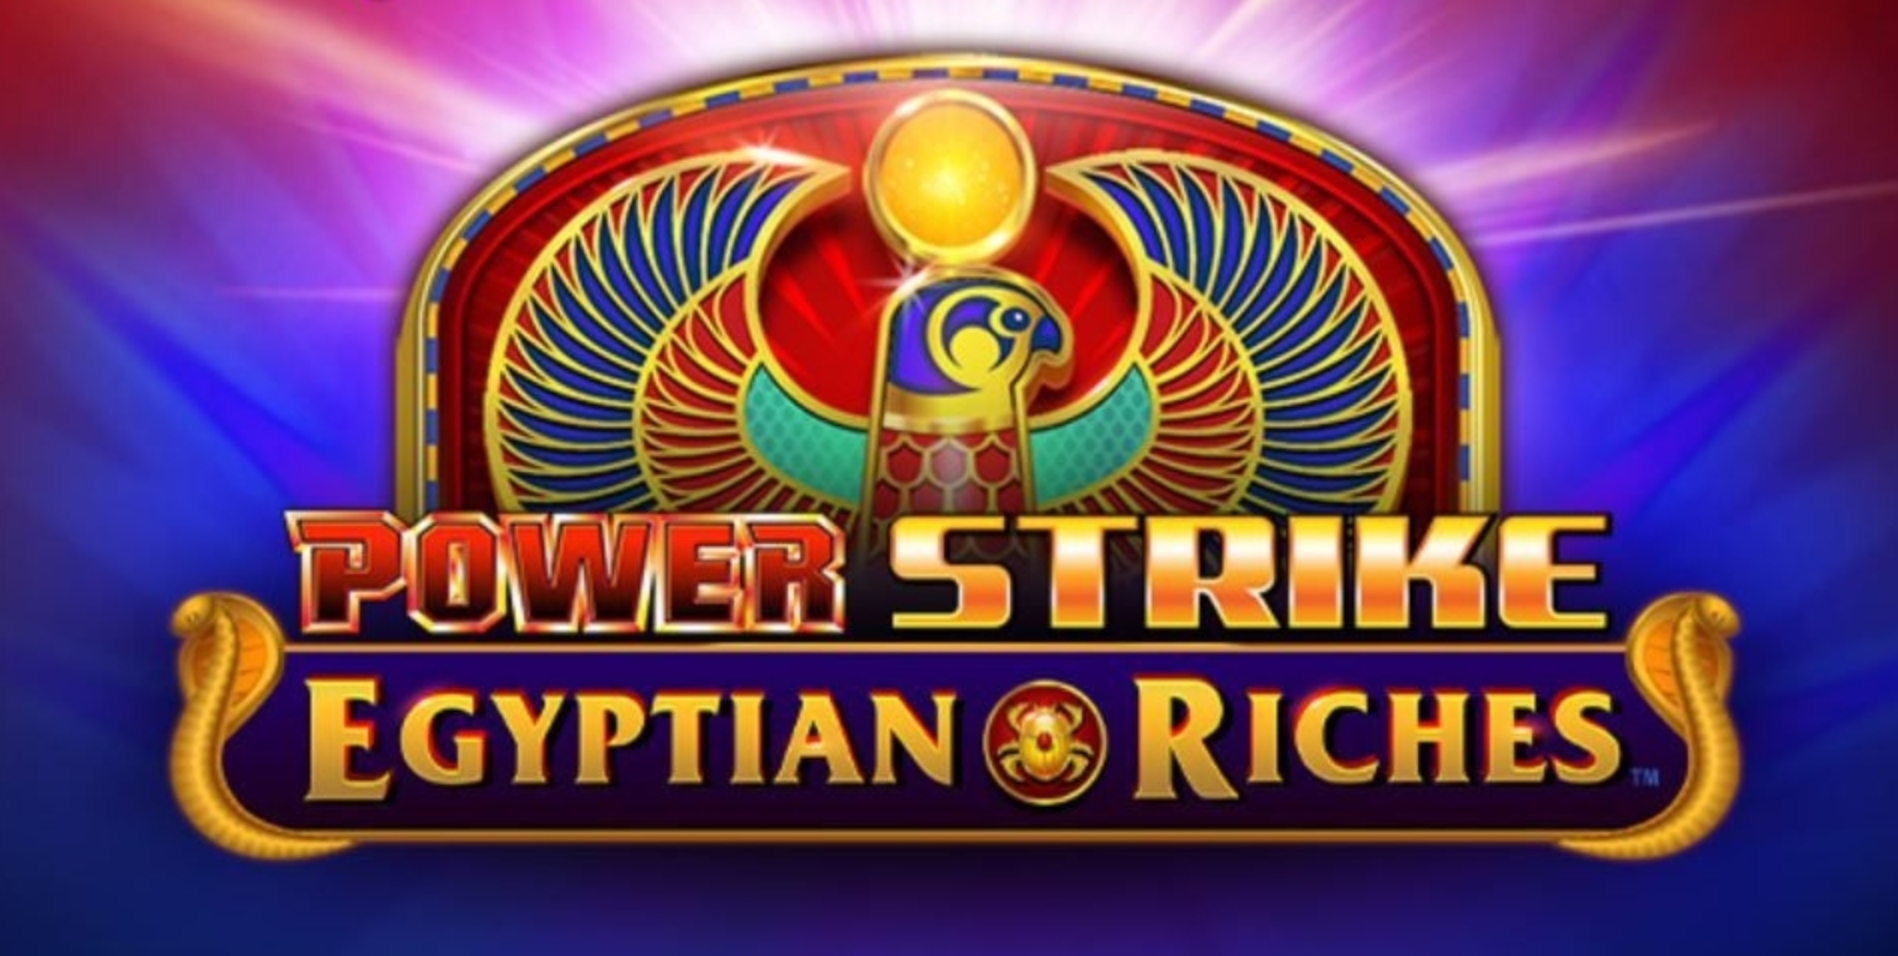 Power Strike Egyptian Riches demo